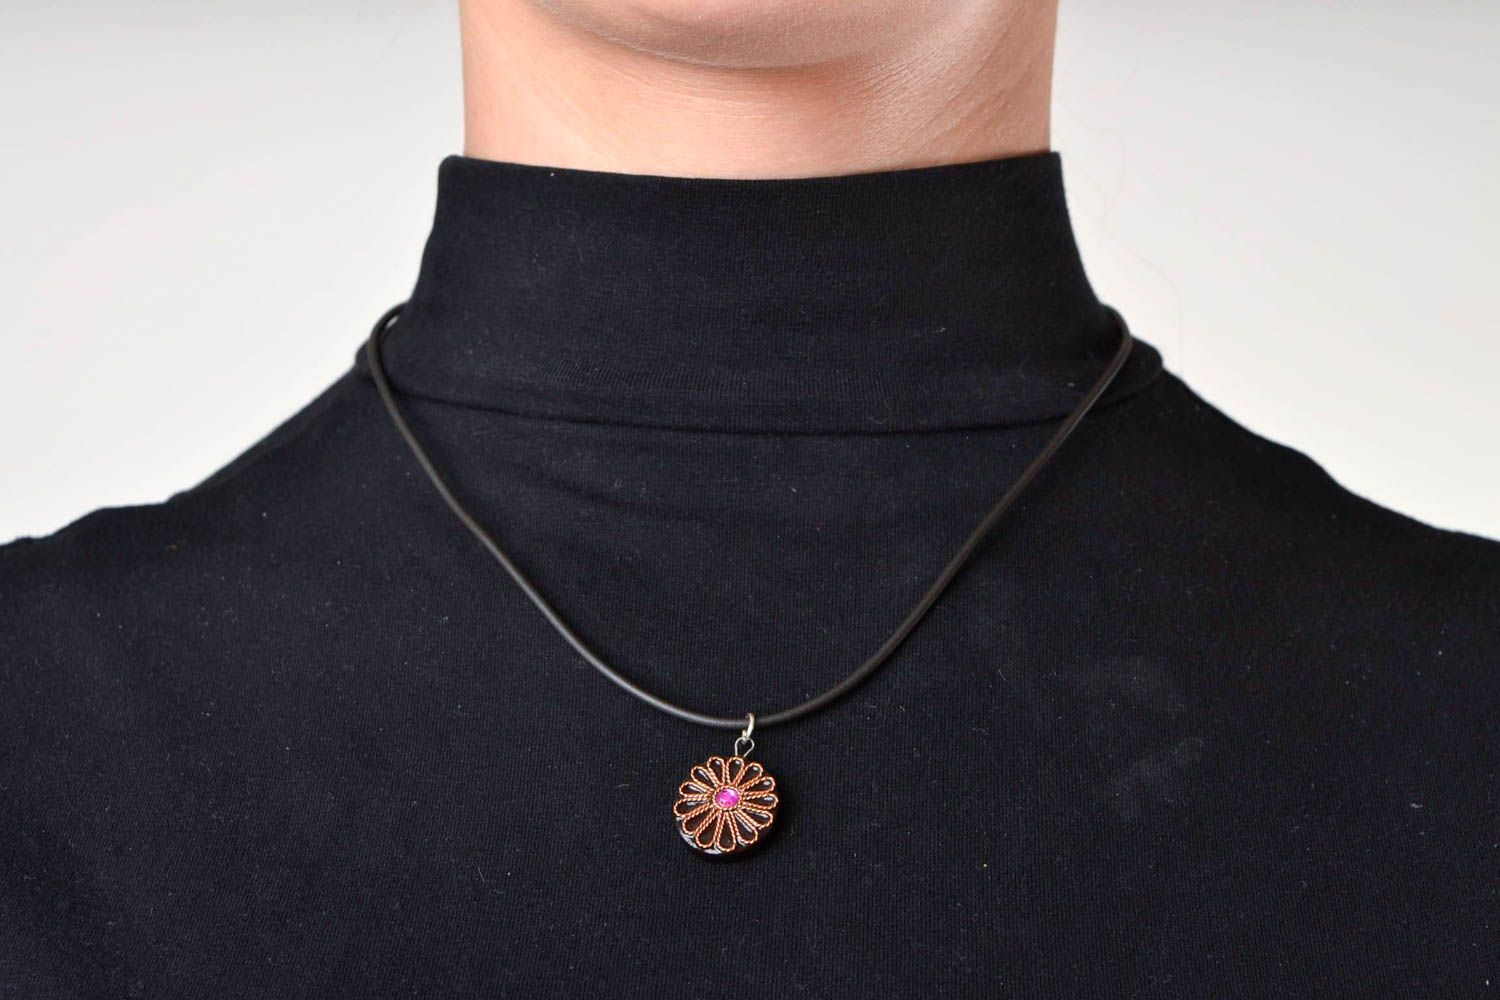 Handmade wooden pendant stylish neck accessory unusual round pendant gift photo 1